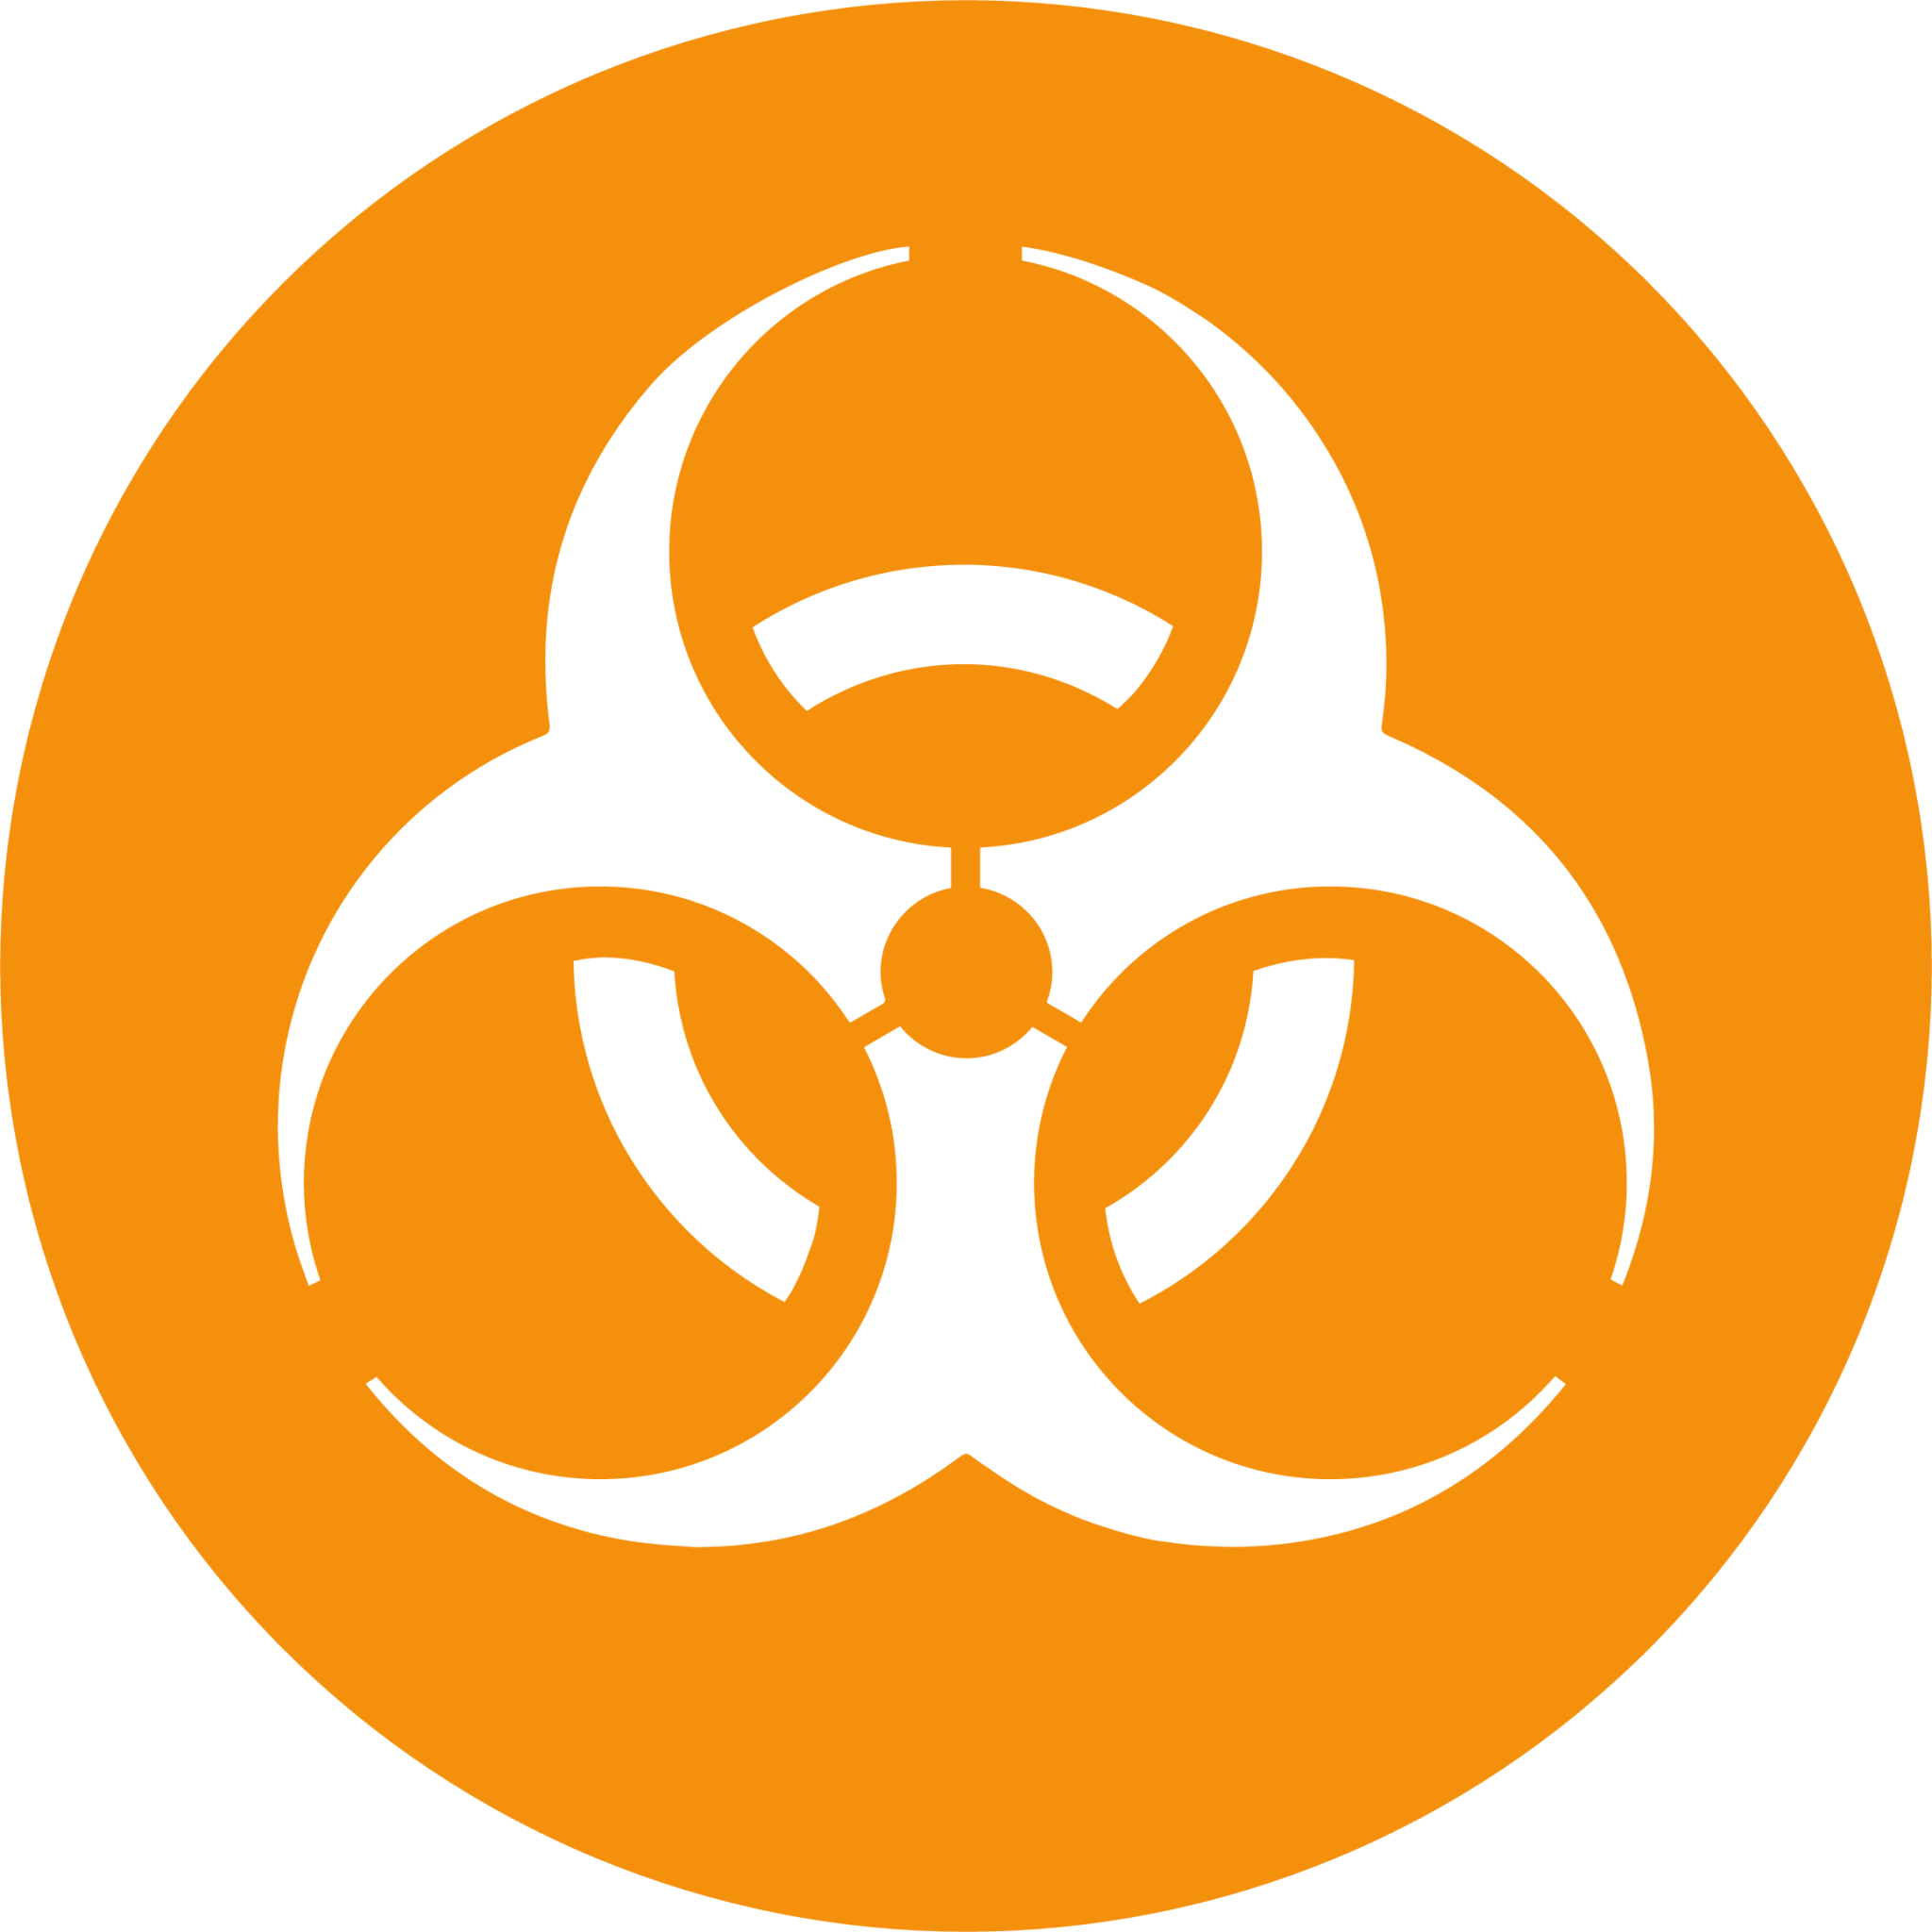 biohazard sign emoji